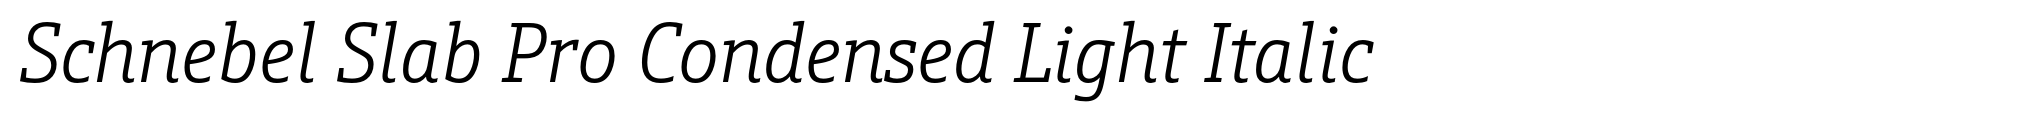 Schnebel Slab Pro Condensed Light Italic image